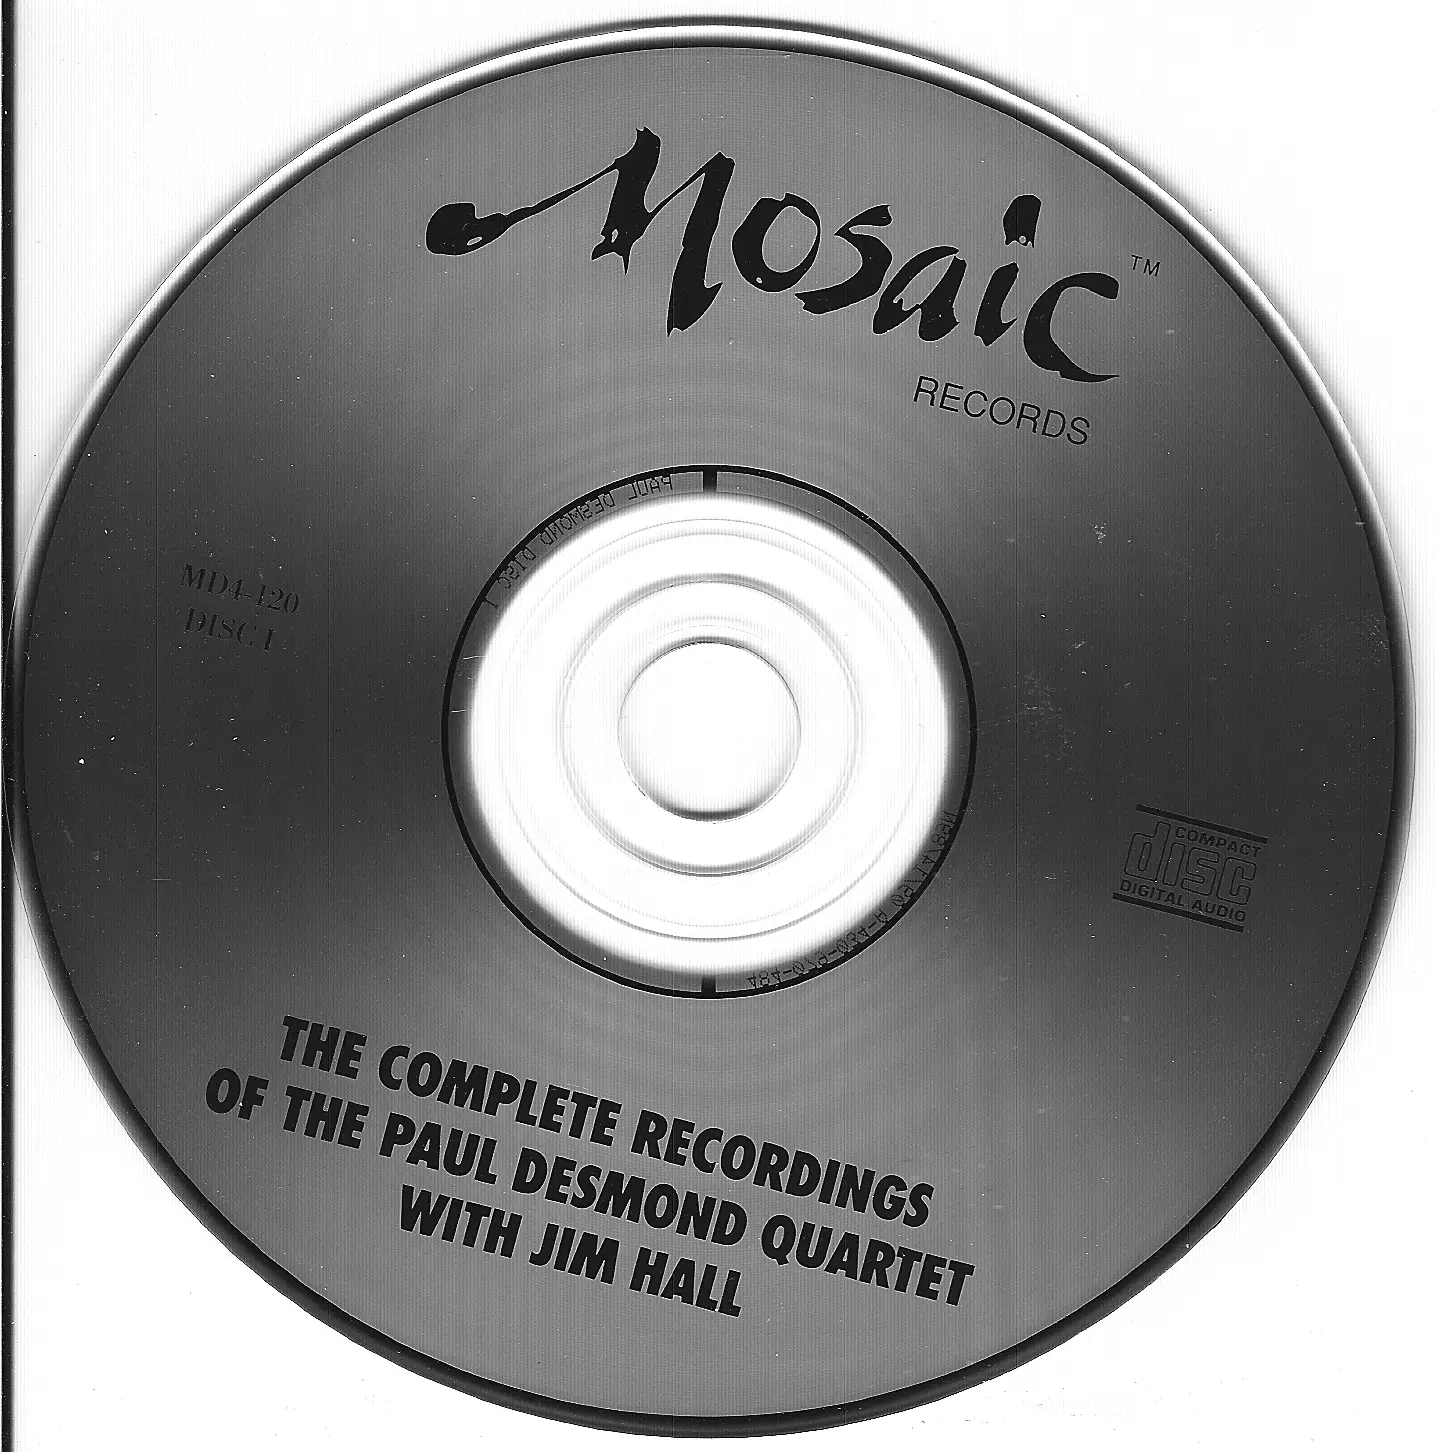 Paul Desmond Quartet with Jim Hall - The Complete Recordings (1988 ...